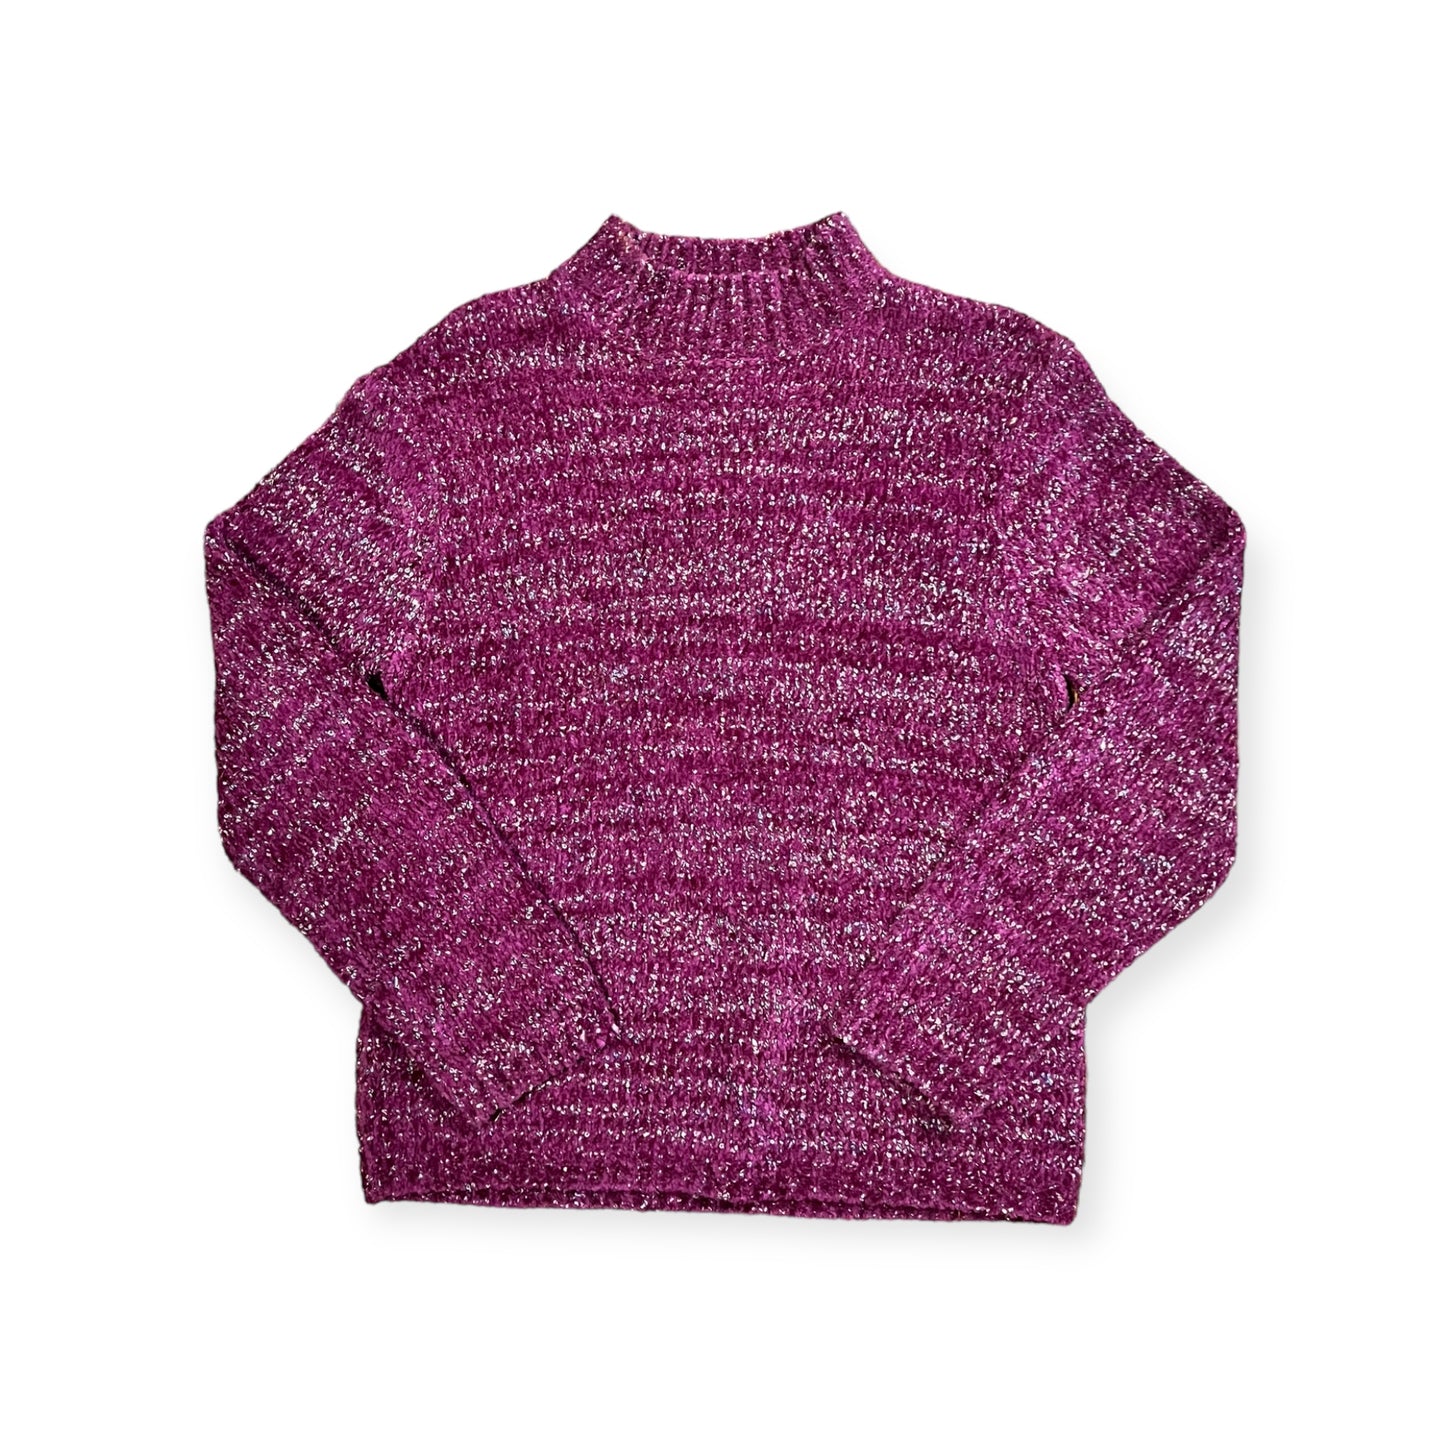 Vintage Knit Sweater - Medium